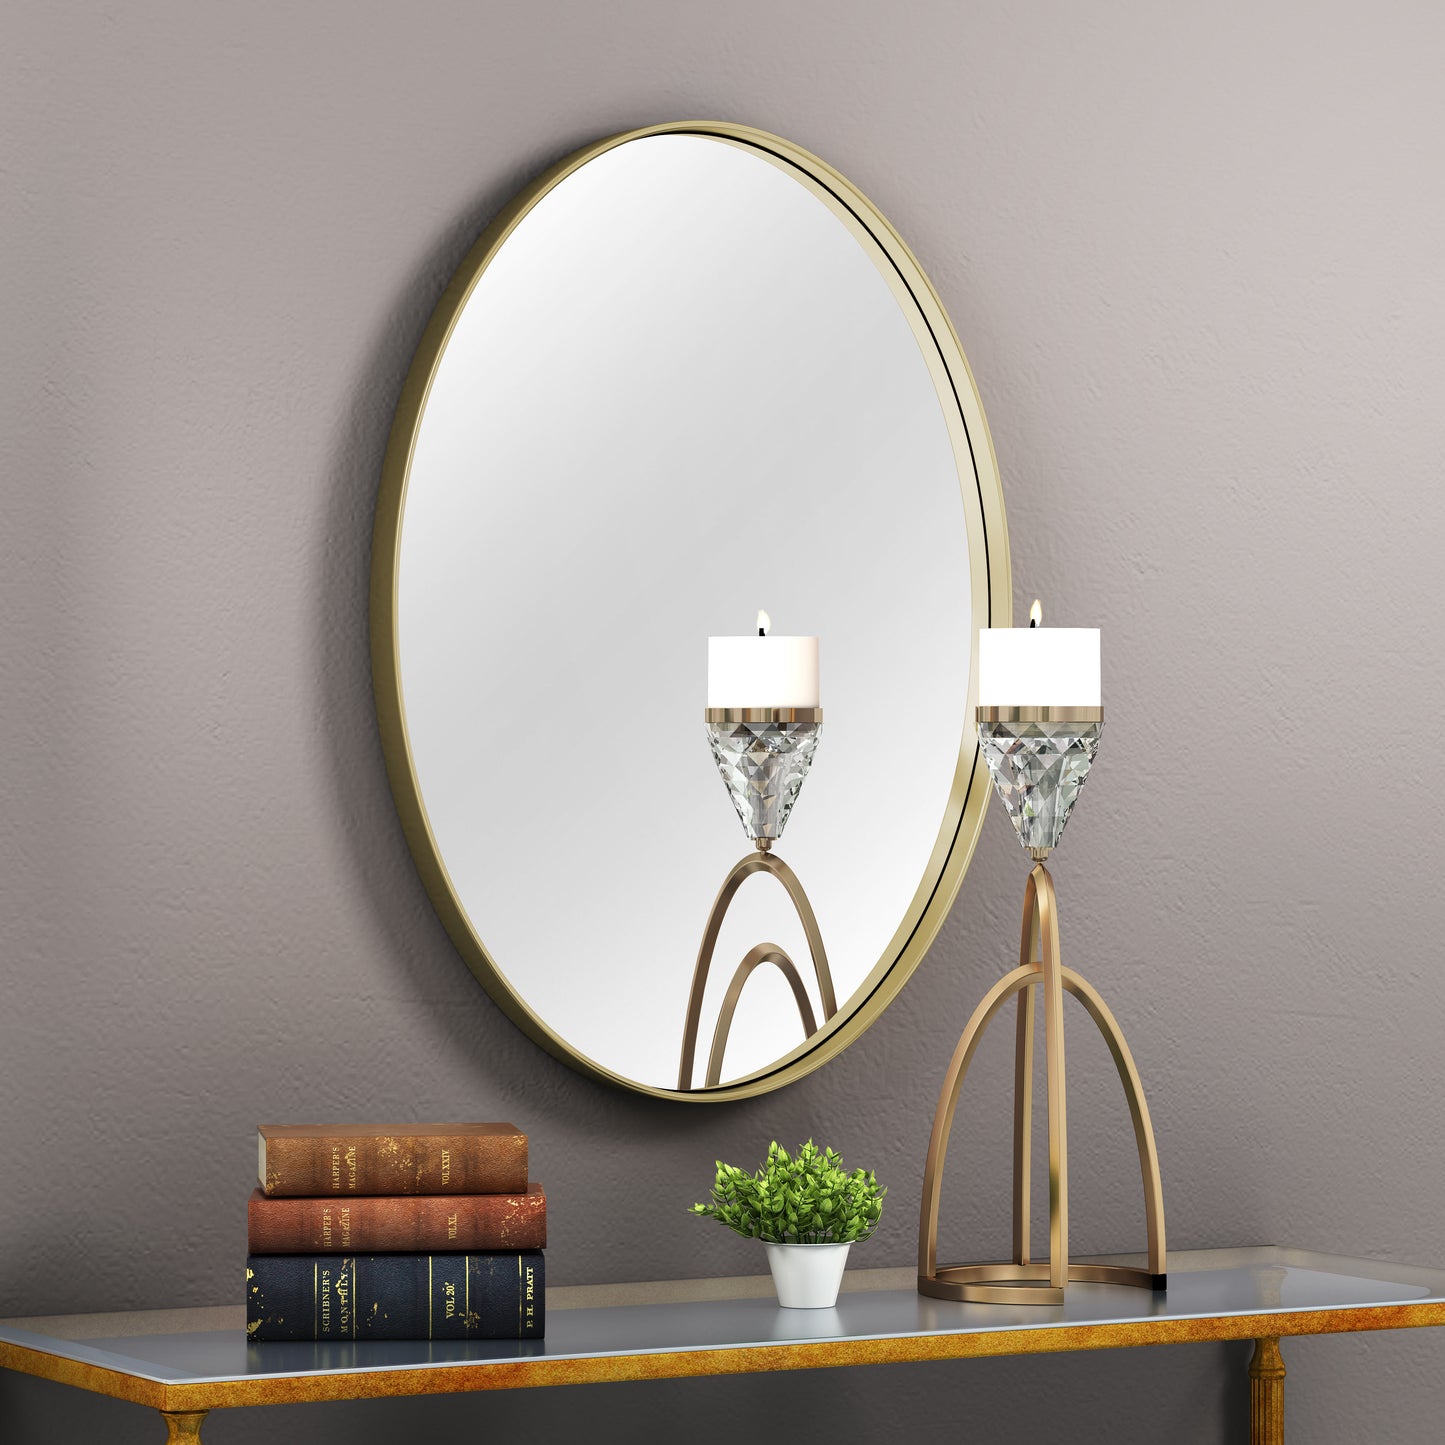 Metal Oval Wall Mirror - Demine Essentials